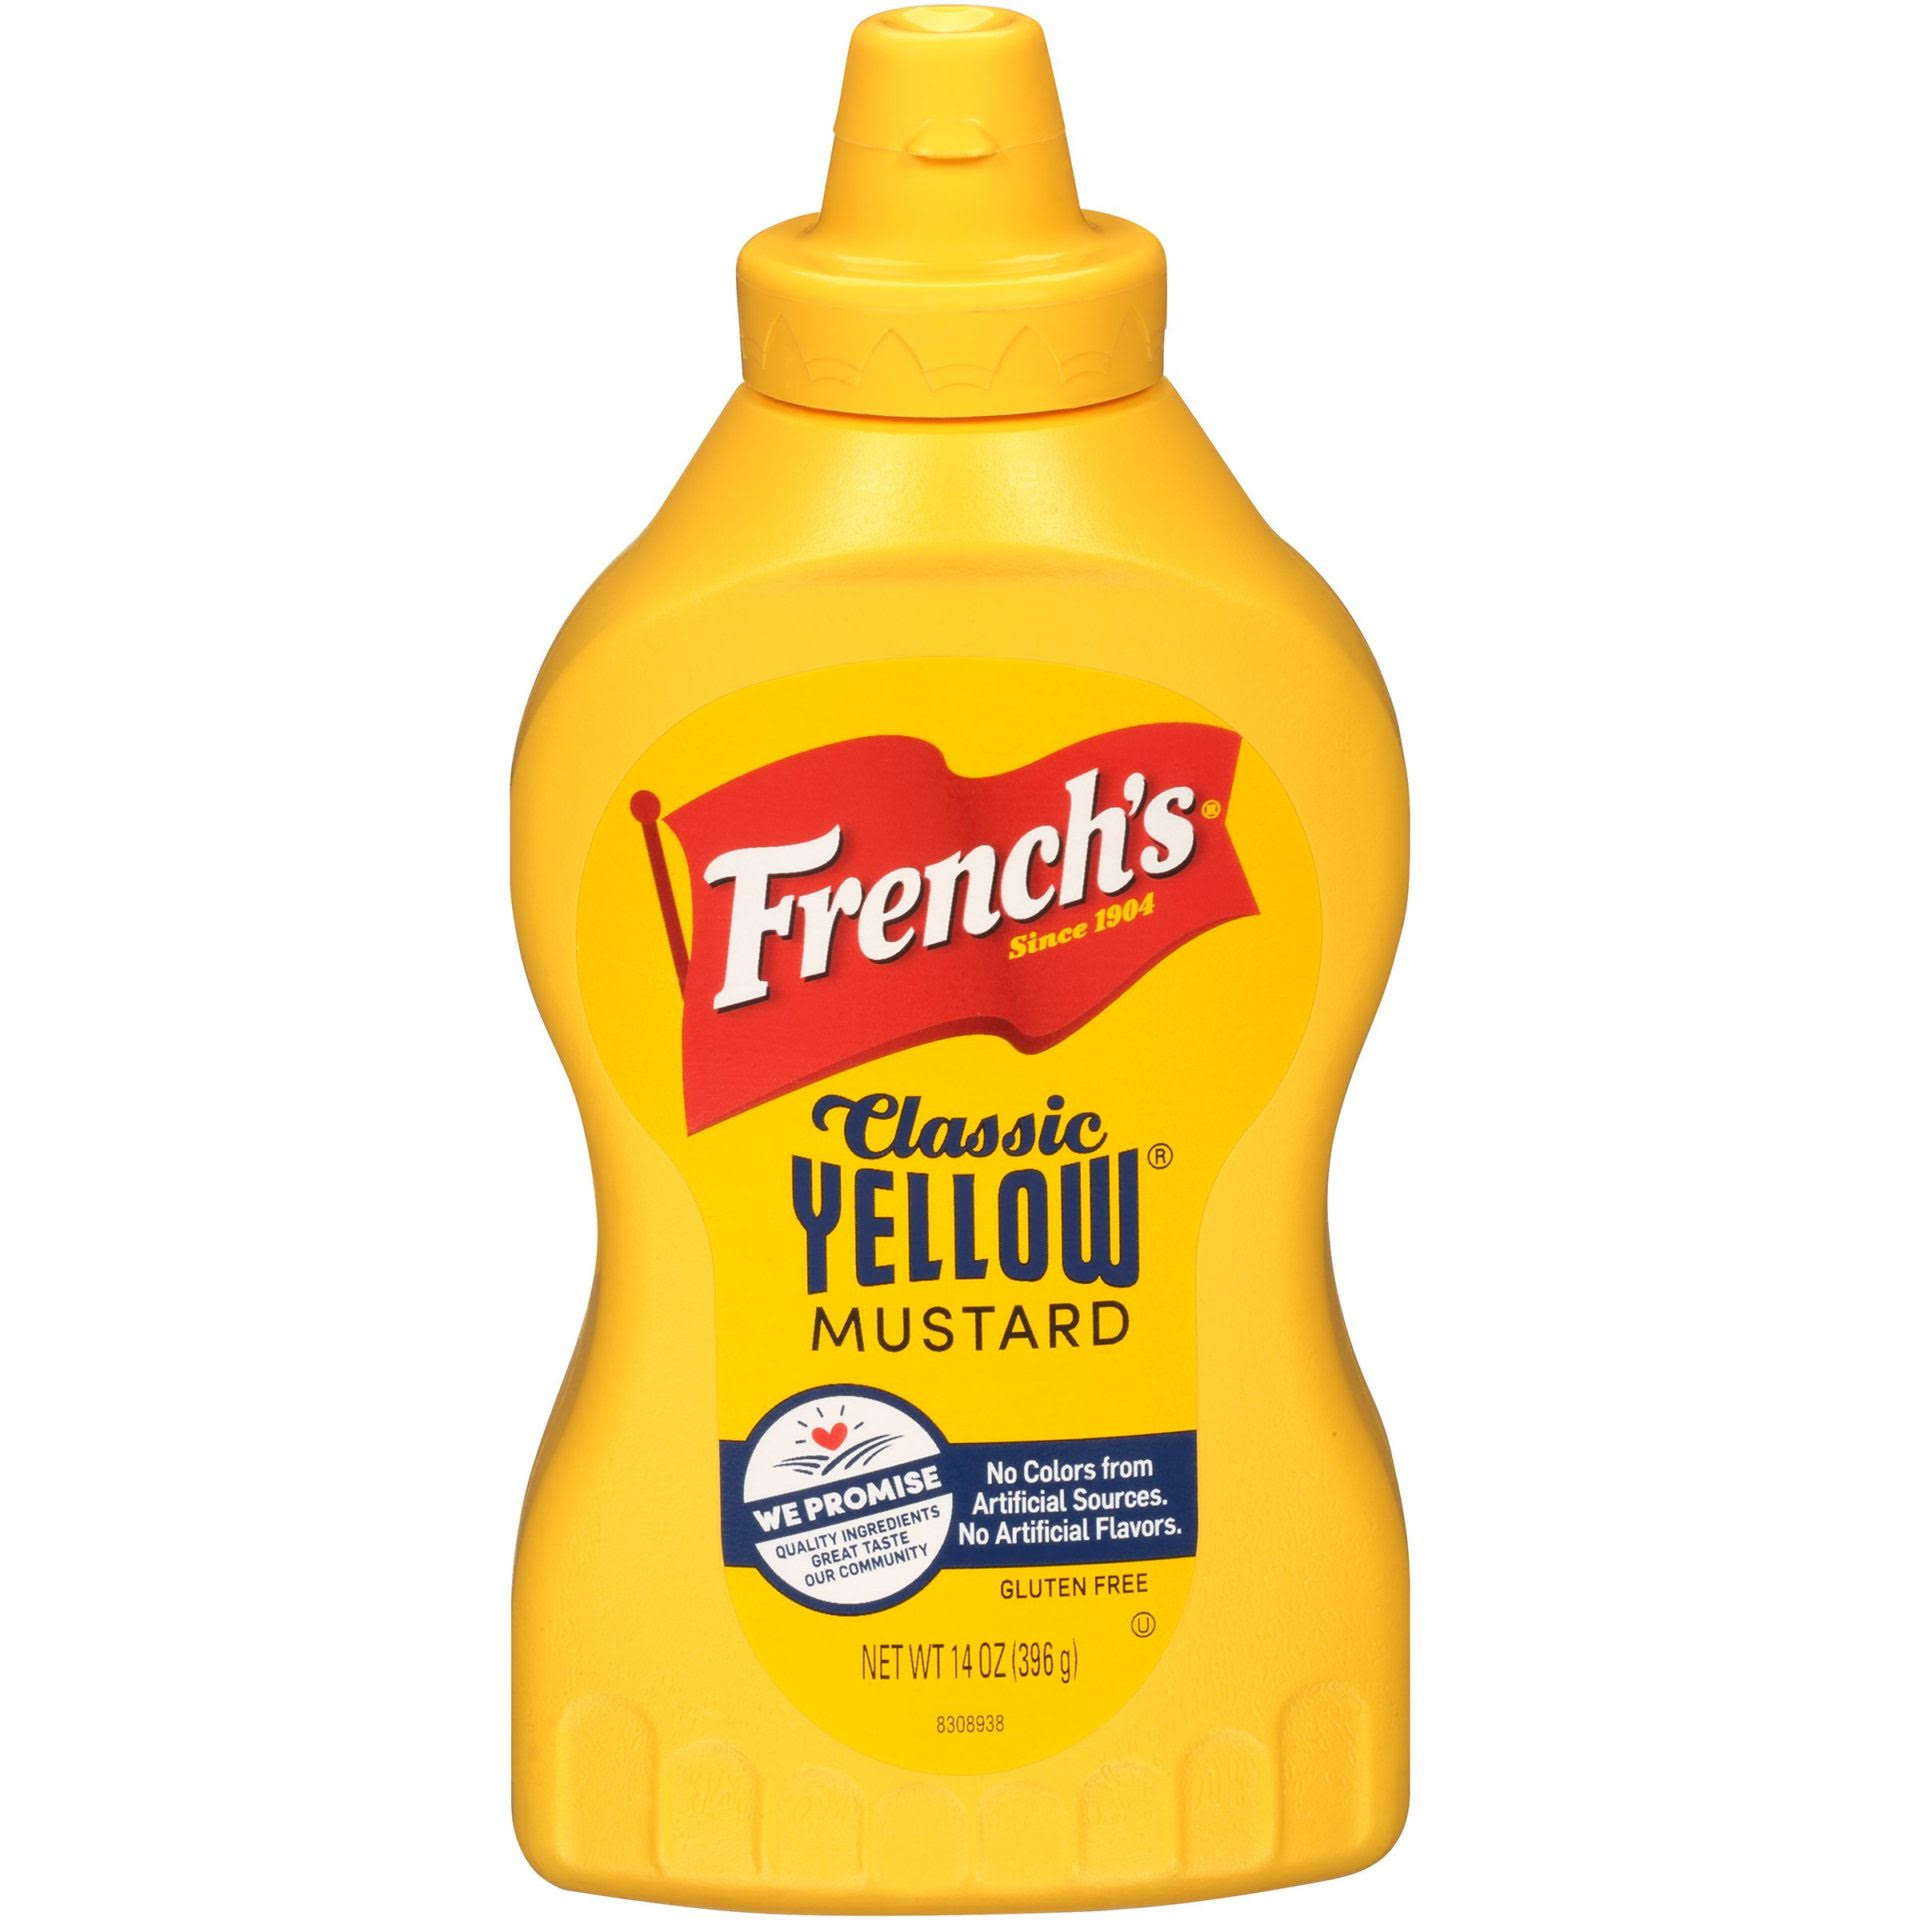 French's Classic Yellow Mustard - 8 oz